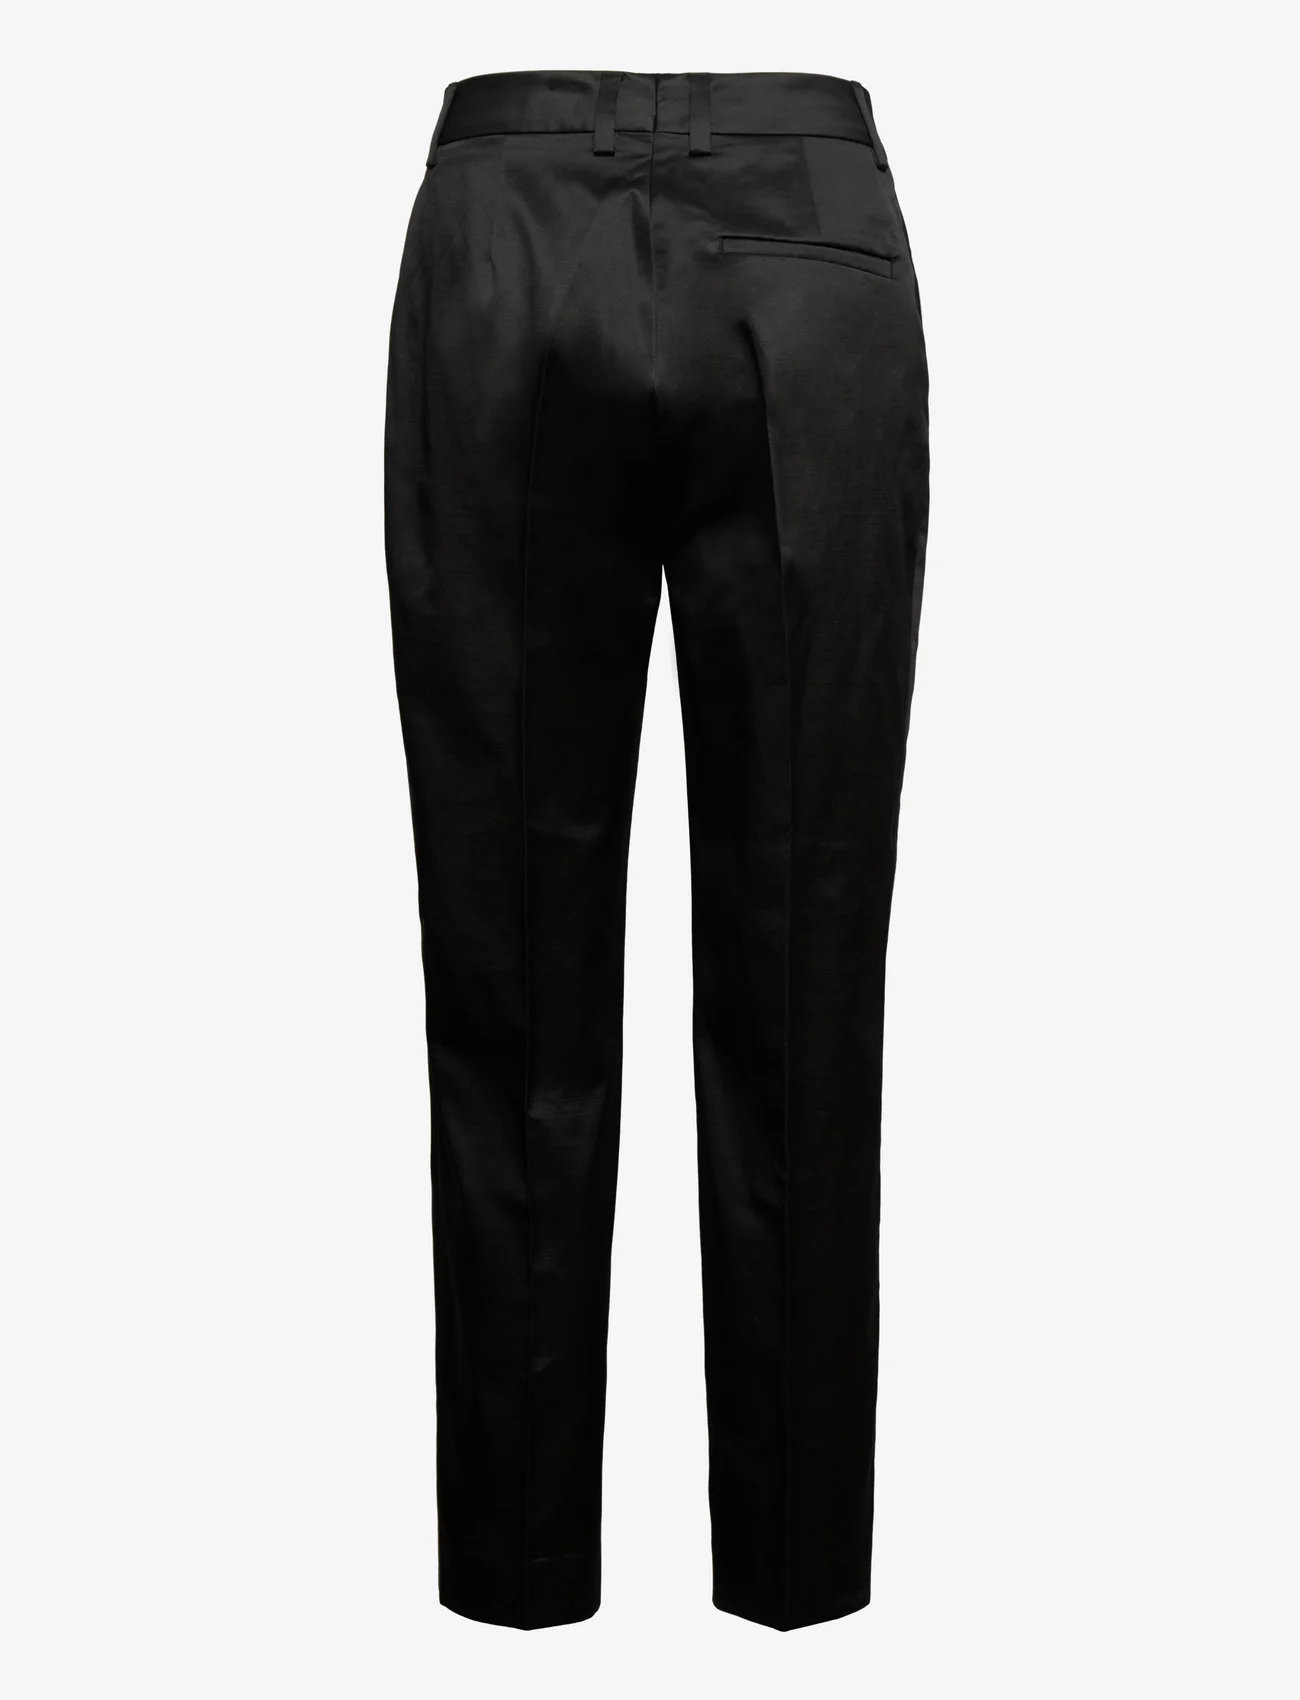 Filippa K - Nica Shiny Trouser - spodnie proste - black - 1